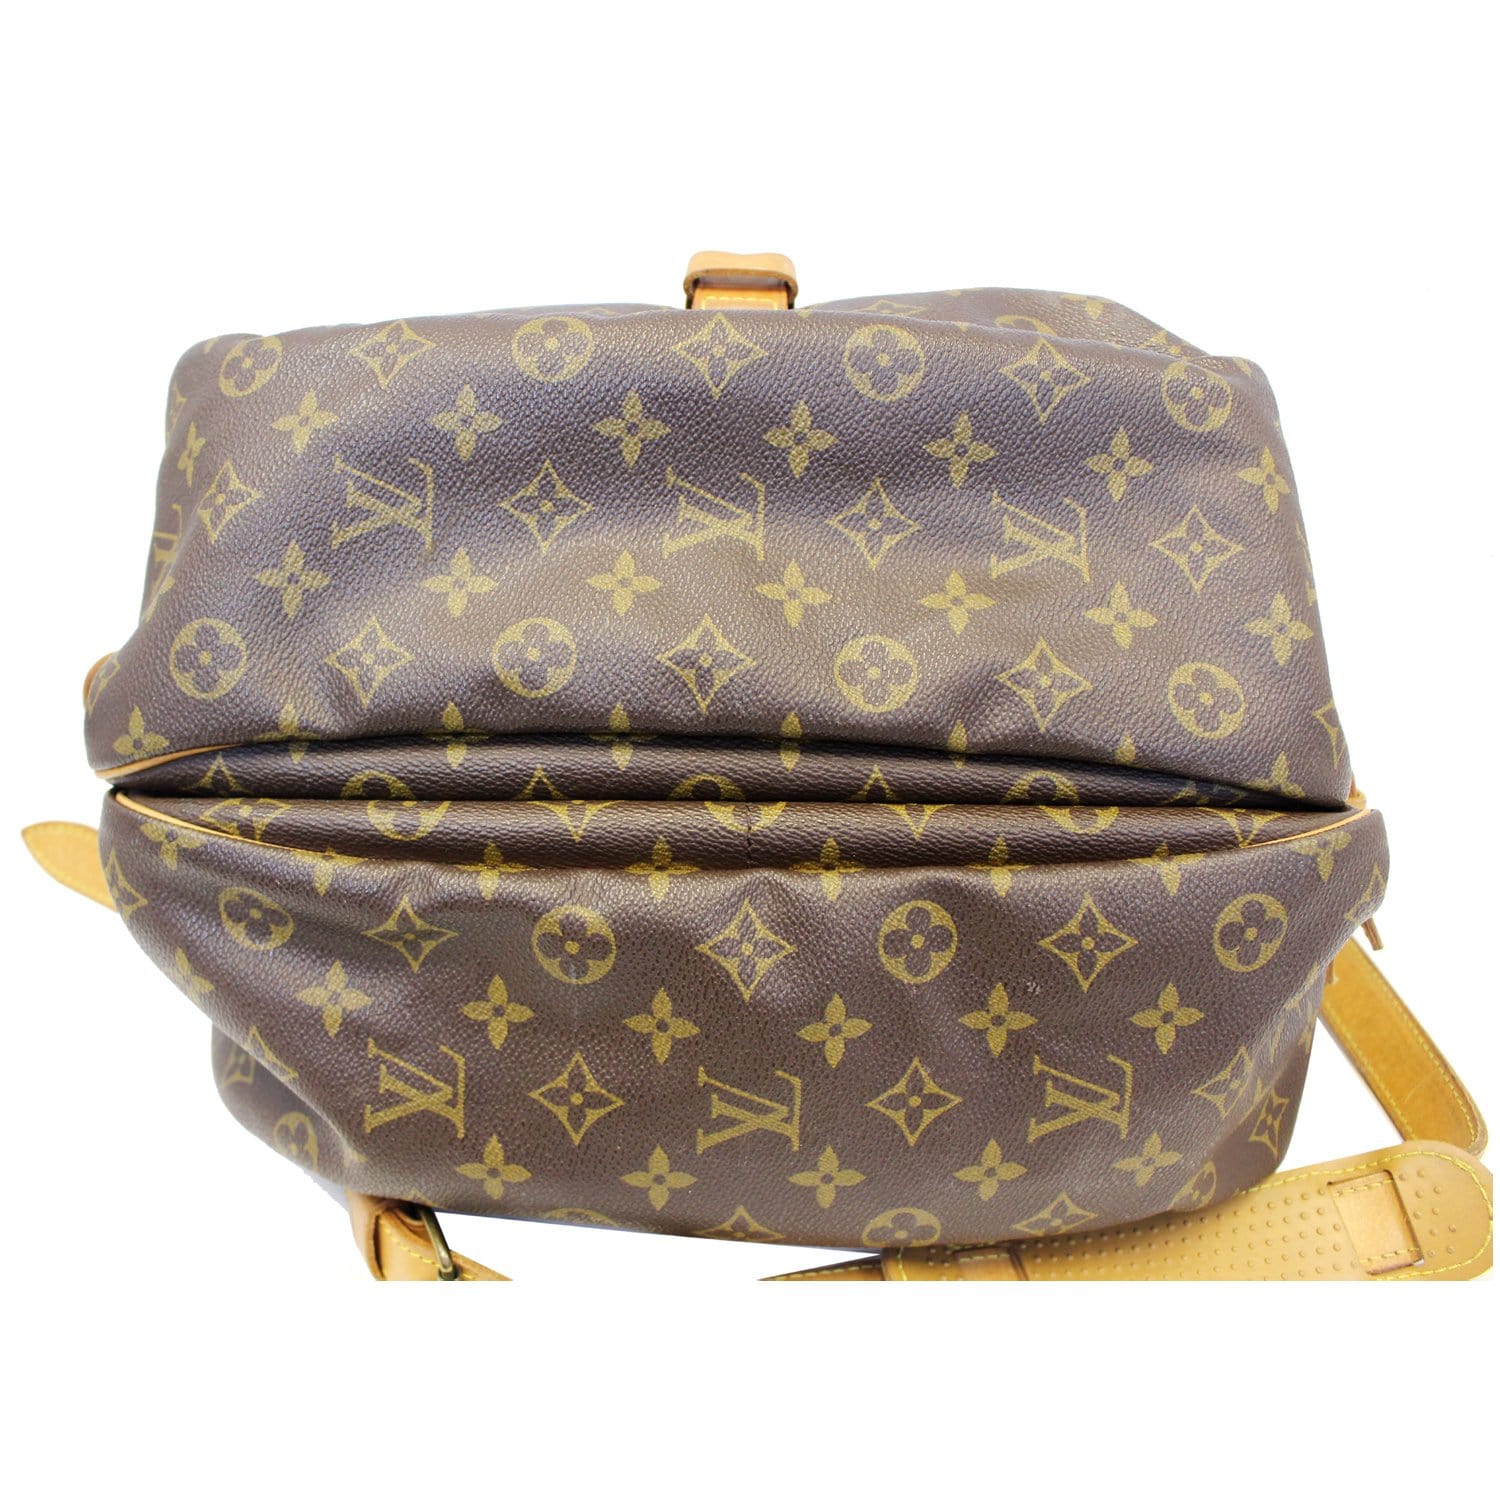 lv yellow straps for handbags